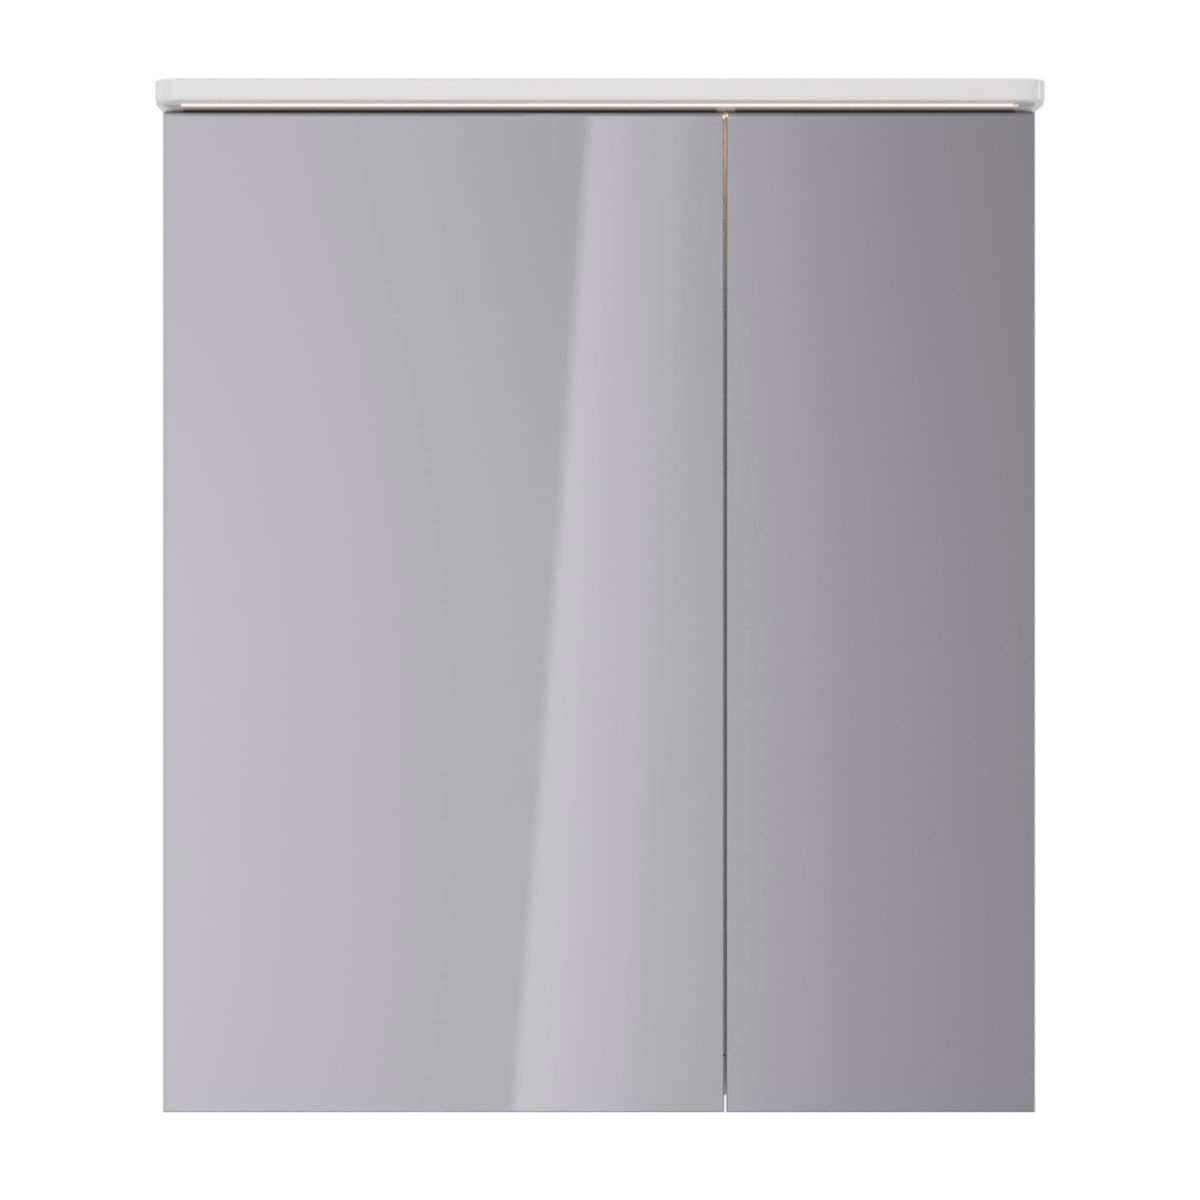 Шкаф зеркальный Lemark ZENON 70х80 см 2-х дверный, с козырьком-подсветкой, с розеткой, цвет корпуса: Белый глянец